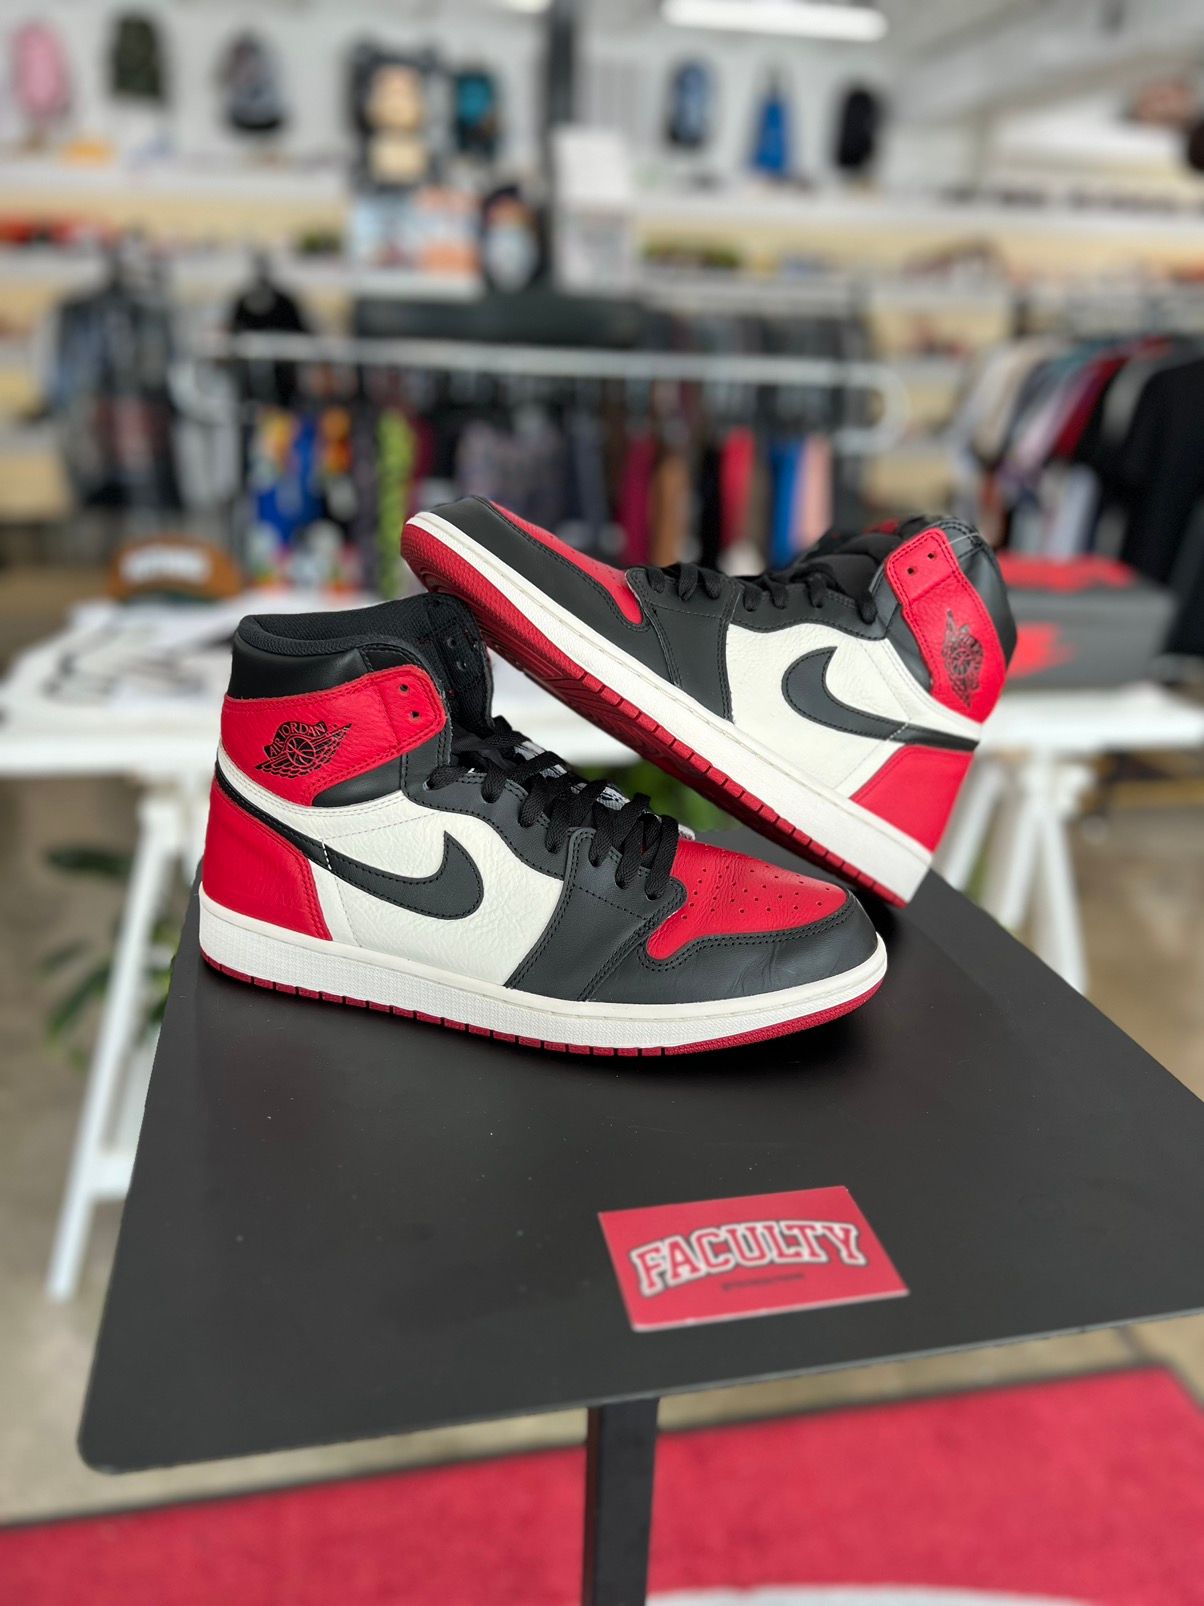 Pre-owned Jordan Nike Jordan 1 High Bred Toe Sz. 12 Shoes In Red